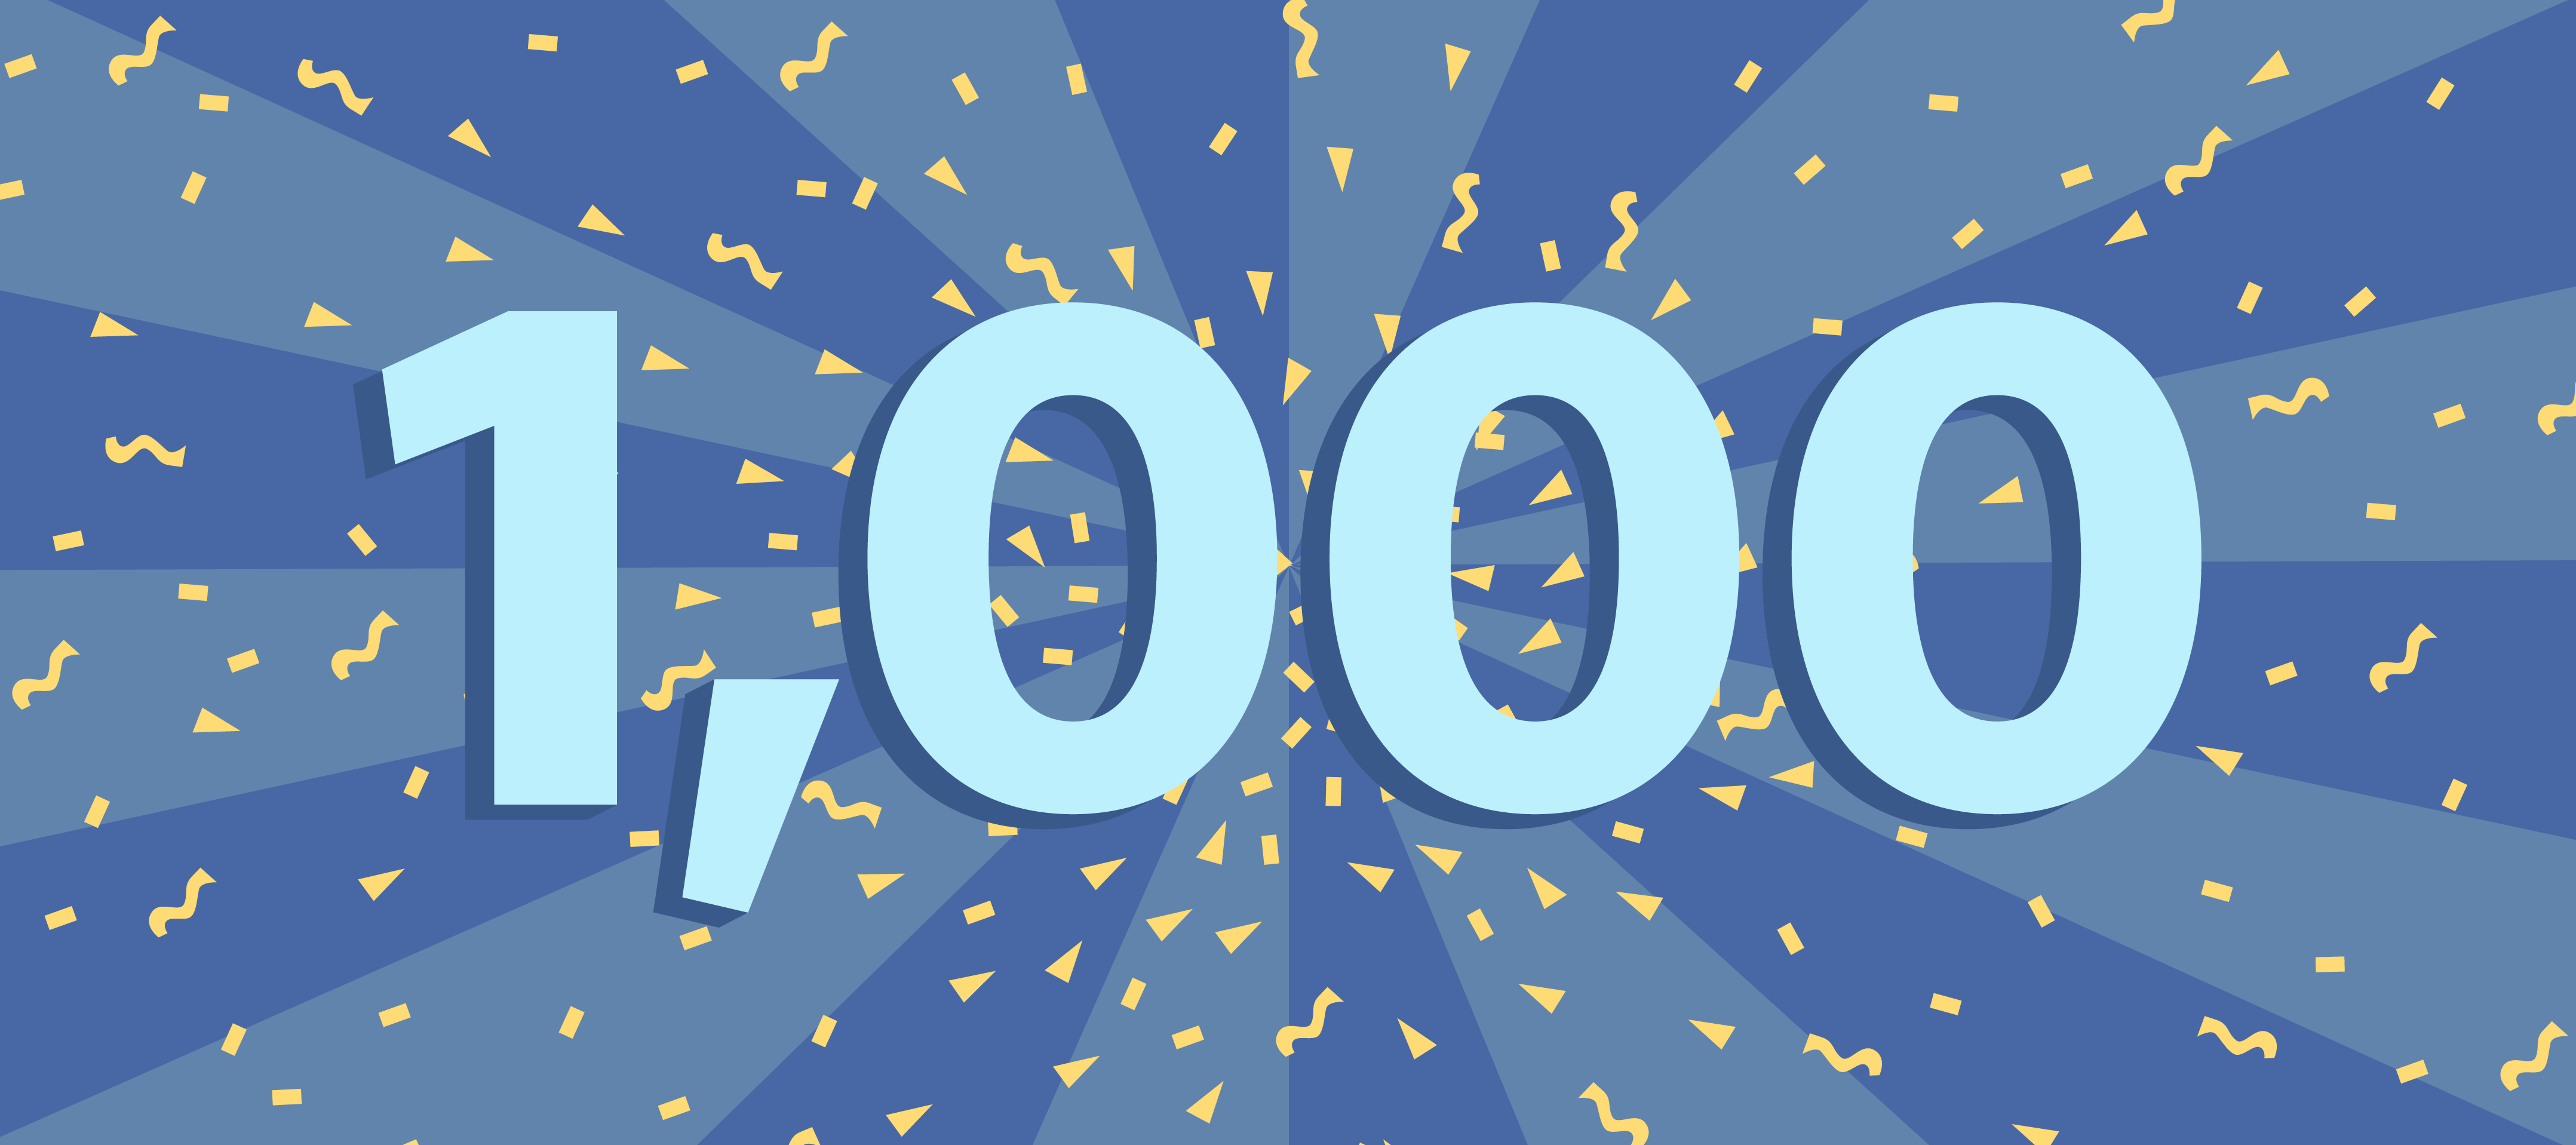 Celebrating A Milestone: 1,000 Massages!